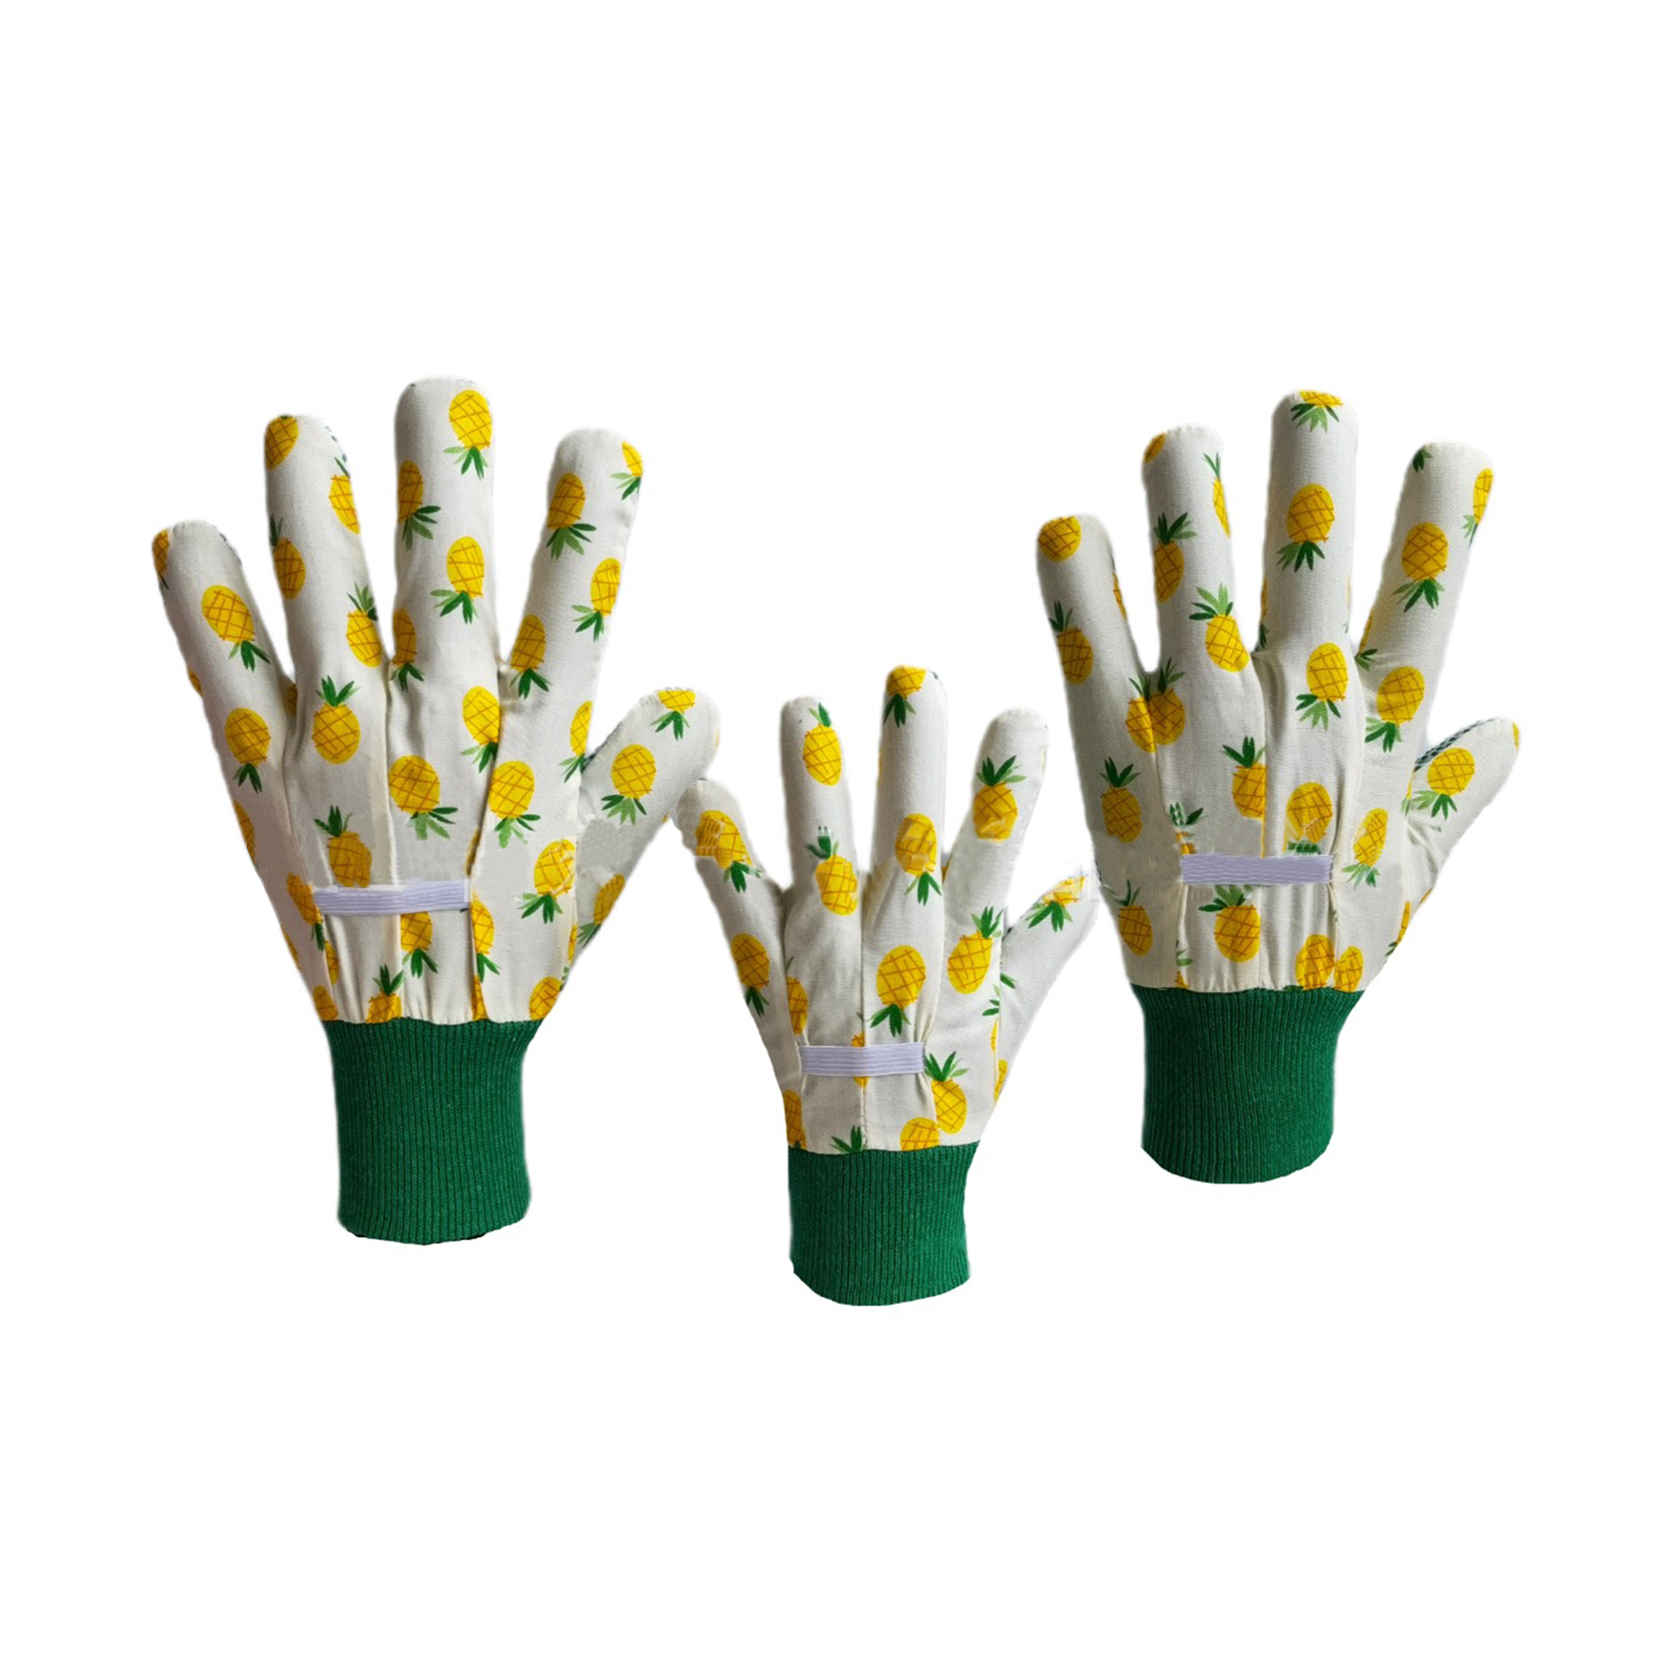 Murang 100% Cotton Palm Garden Gloves PVC Dotted Cotton Garden Gloves Unisex